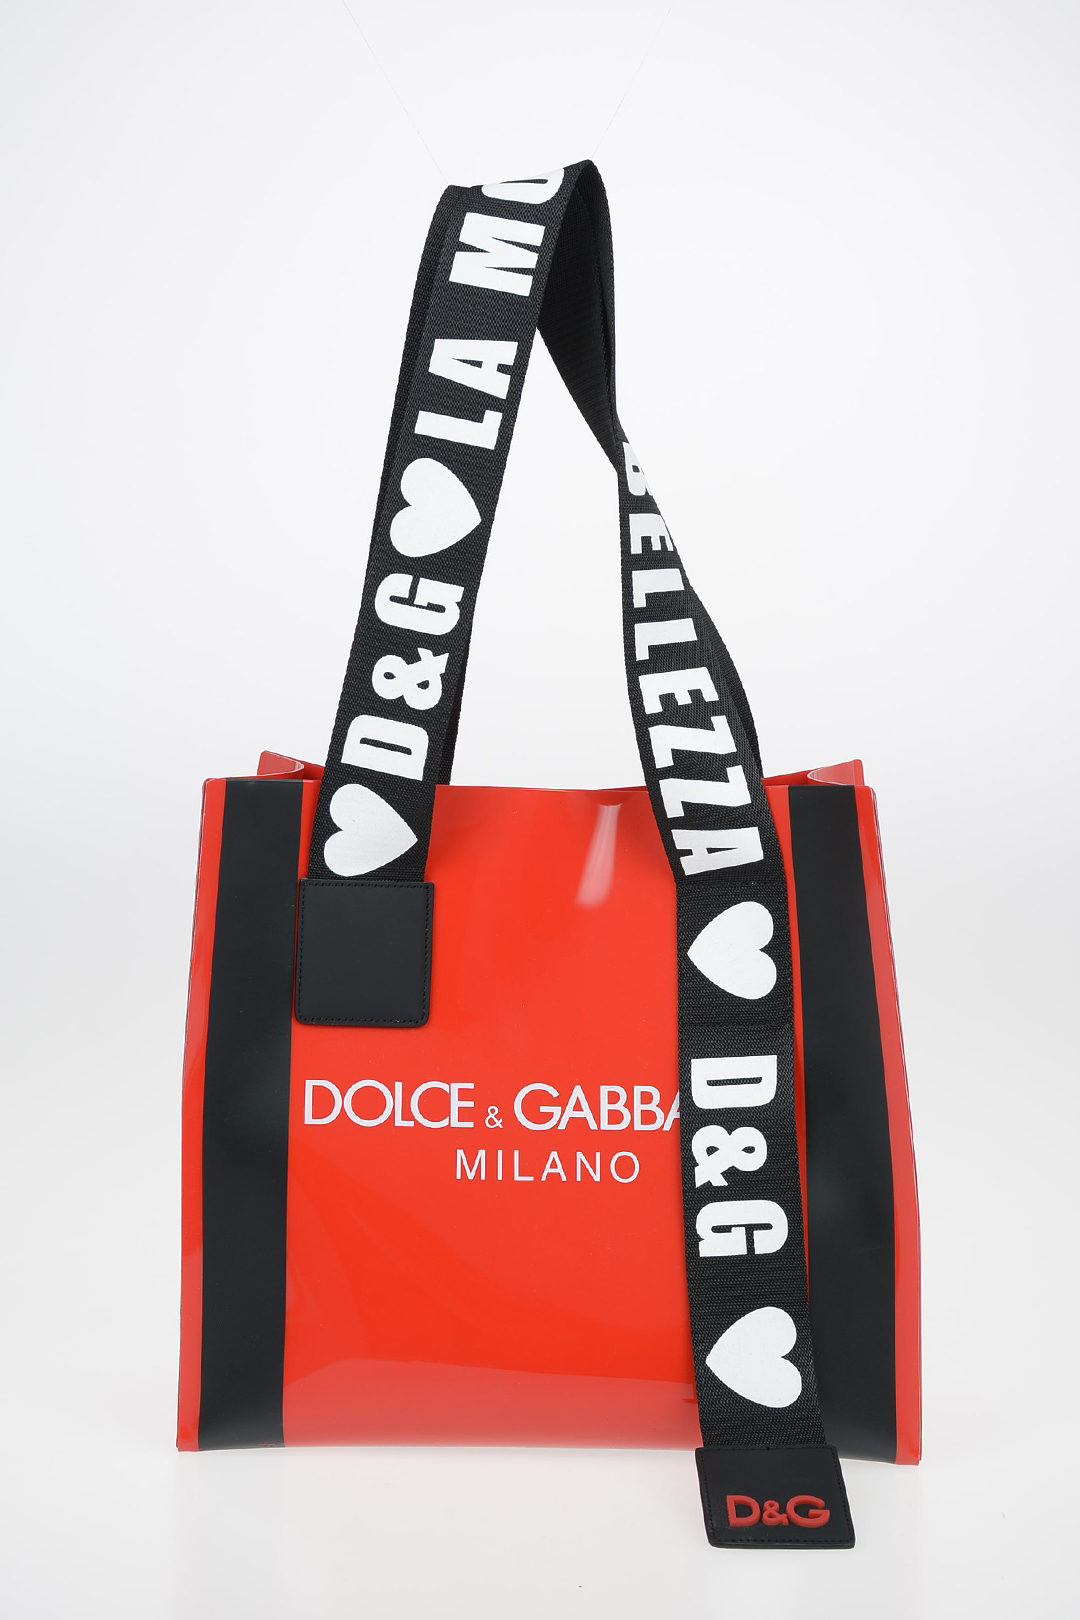 dolce and gabbana pvc bag